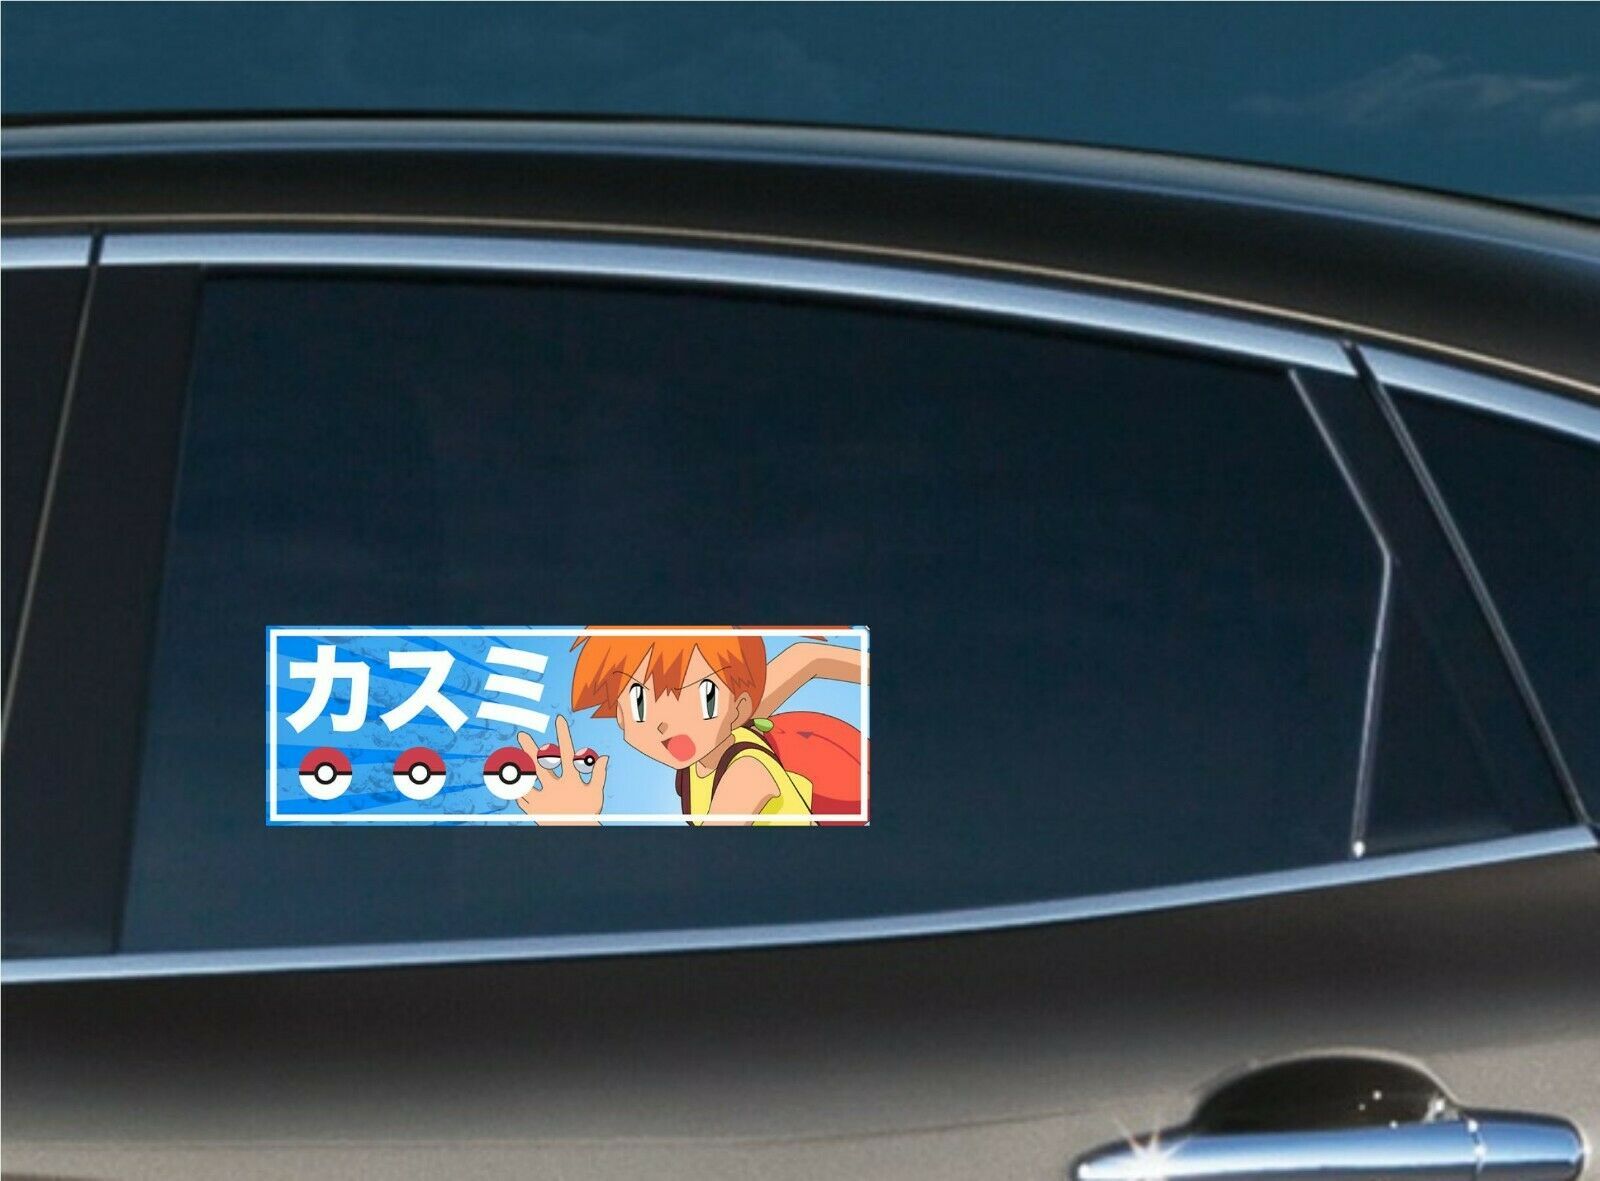 Misty Slap Bumper Laptop Car Window Vinyl Decal Sticker Anime Trainer Stanced